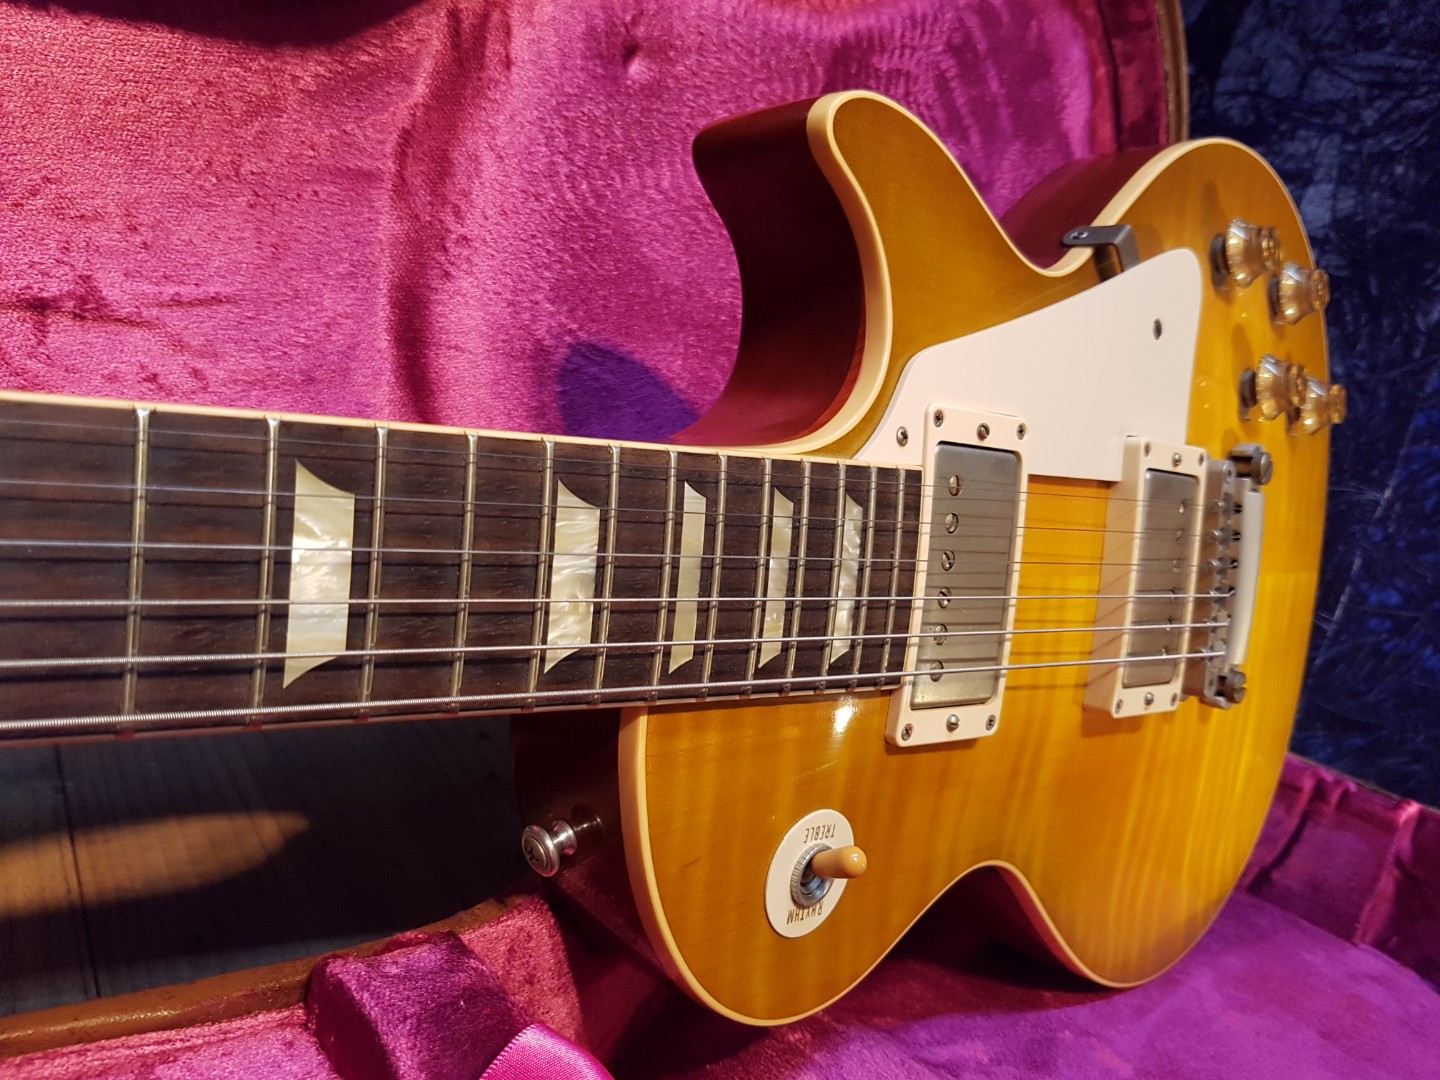 2011 Gibson Les Paul Historic 1959